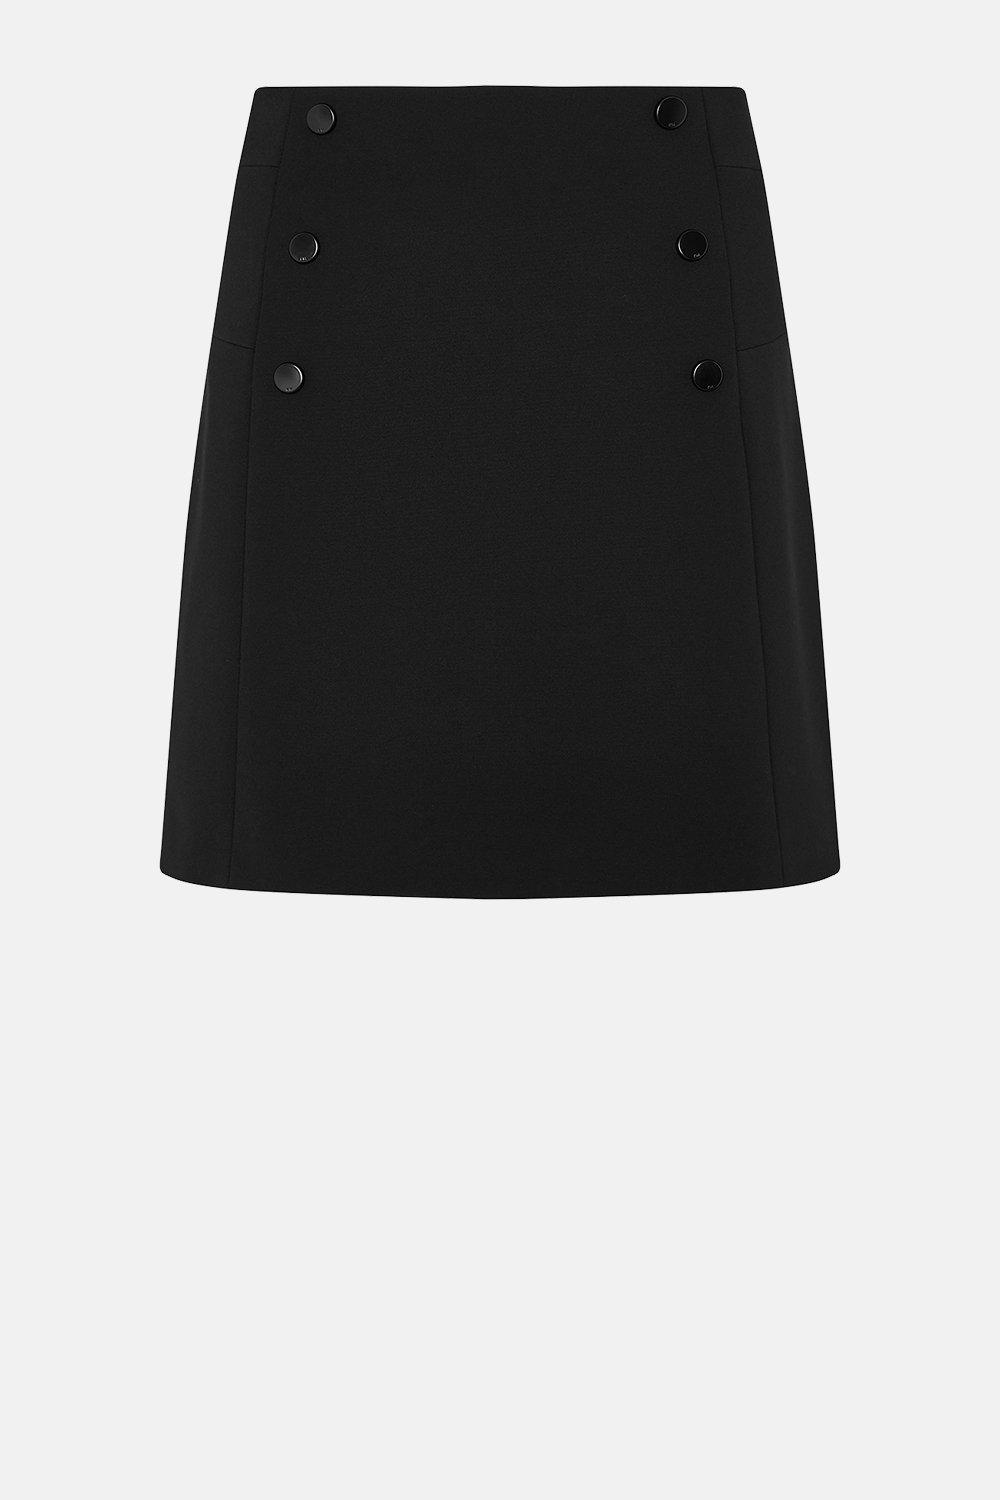 black mini skirt